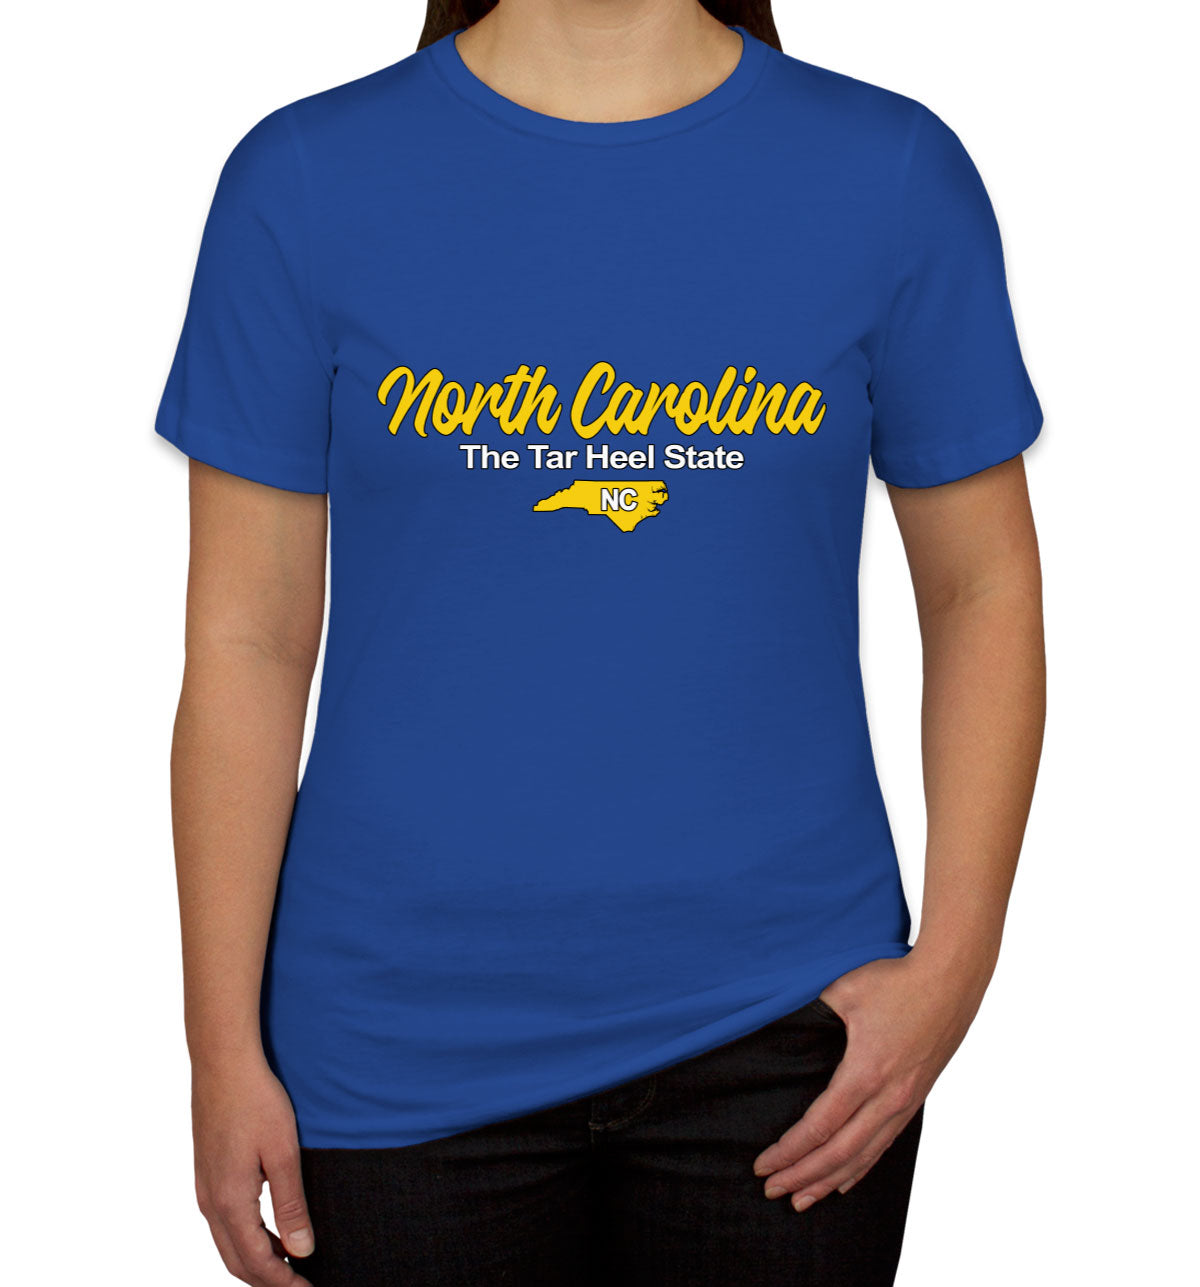 North Carolina The Tar Heel State Women's T-shirt